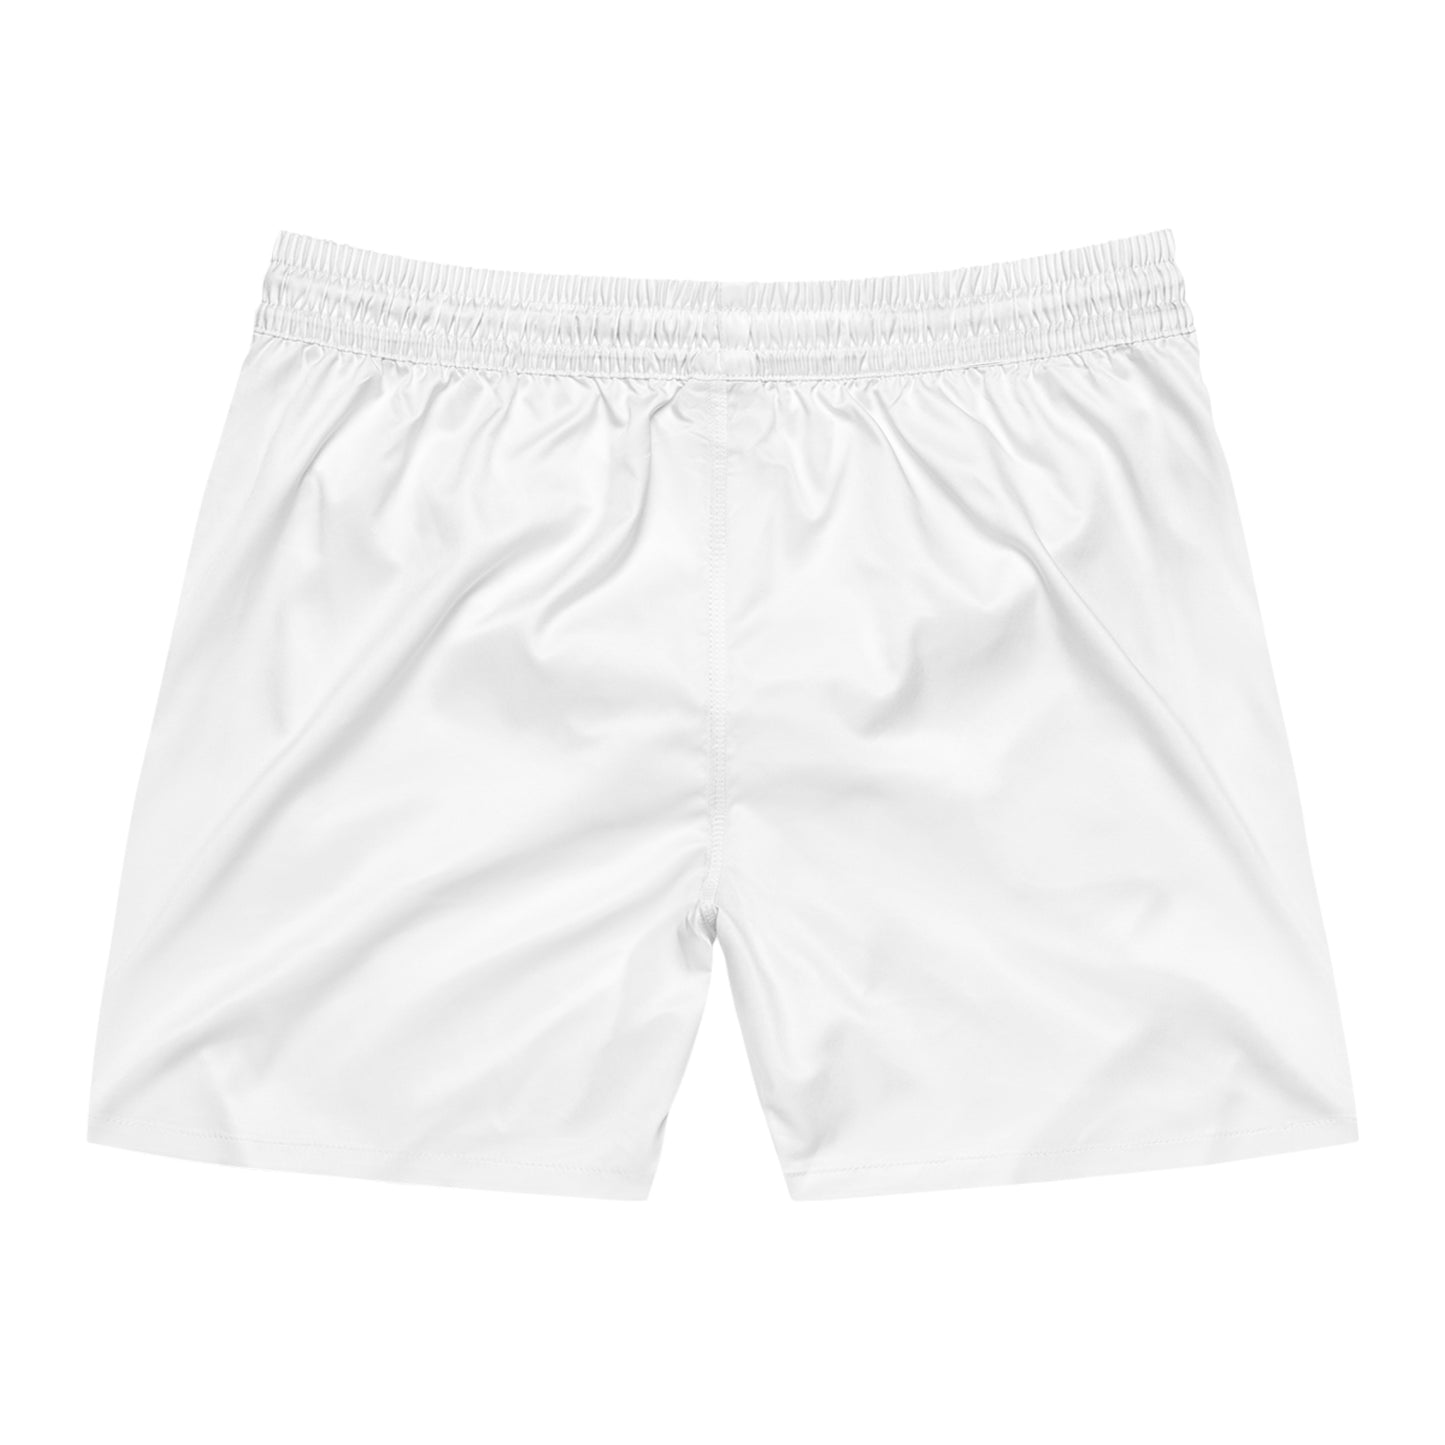 Penn State Shorts